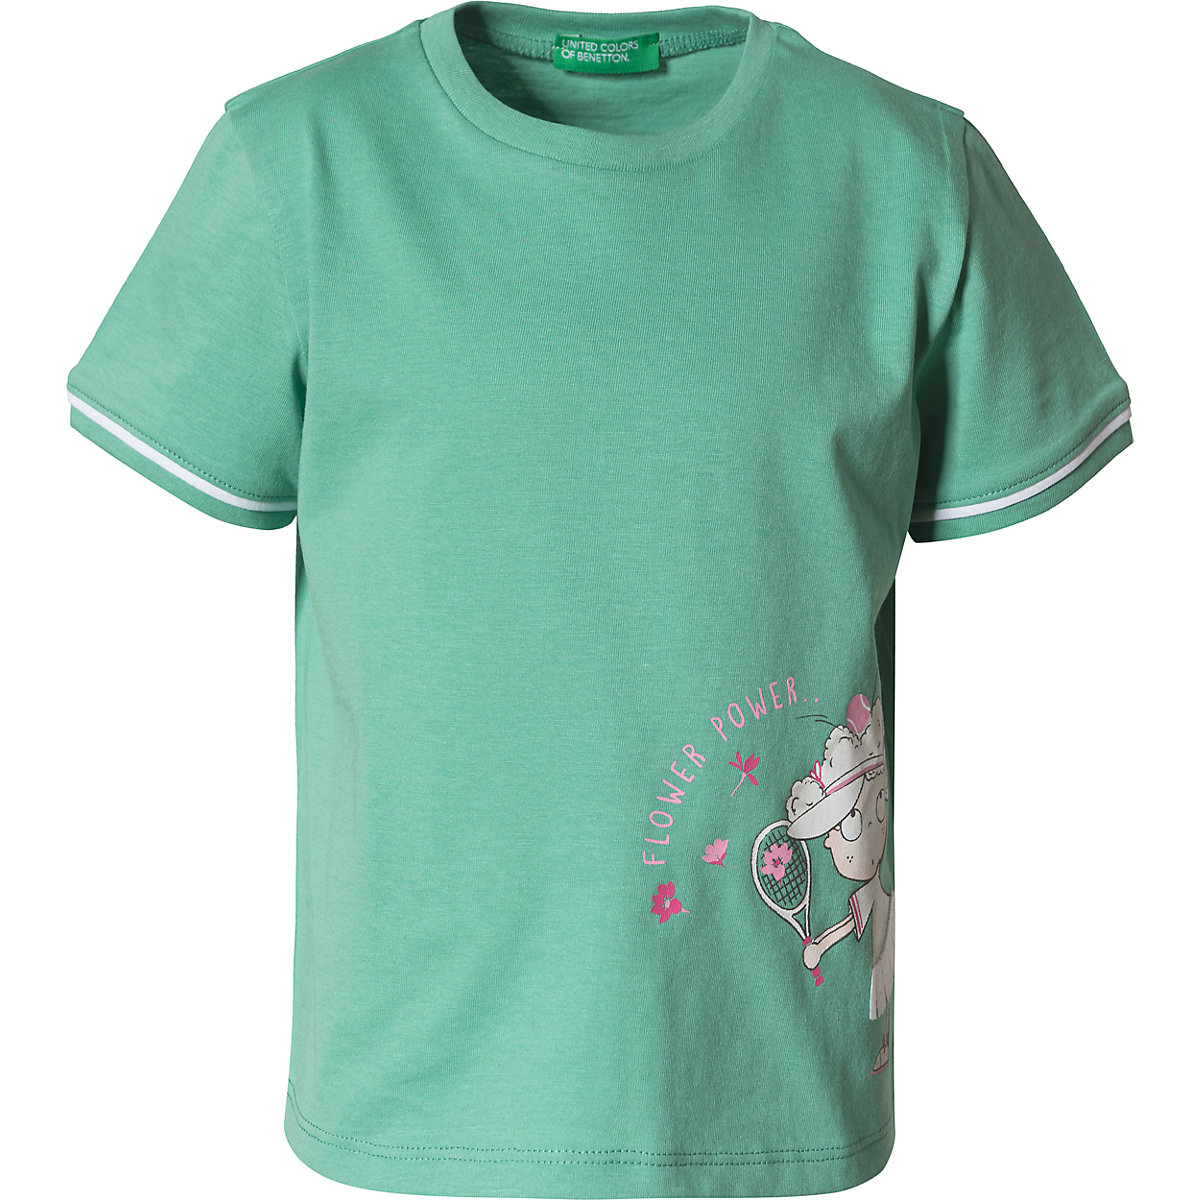 United Colors of Benetton T-Shirt für Mädchen hellgrün